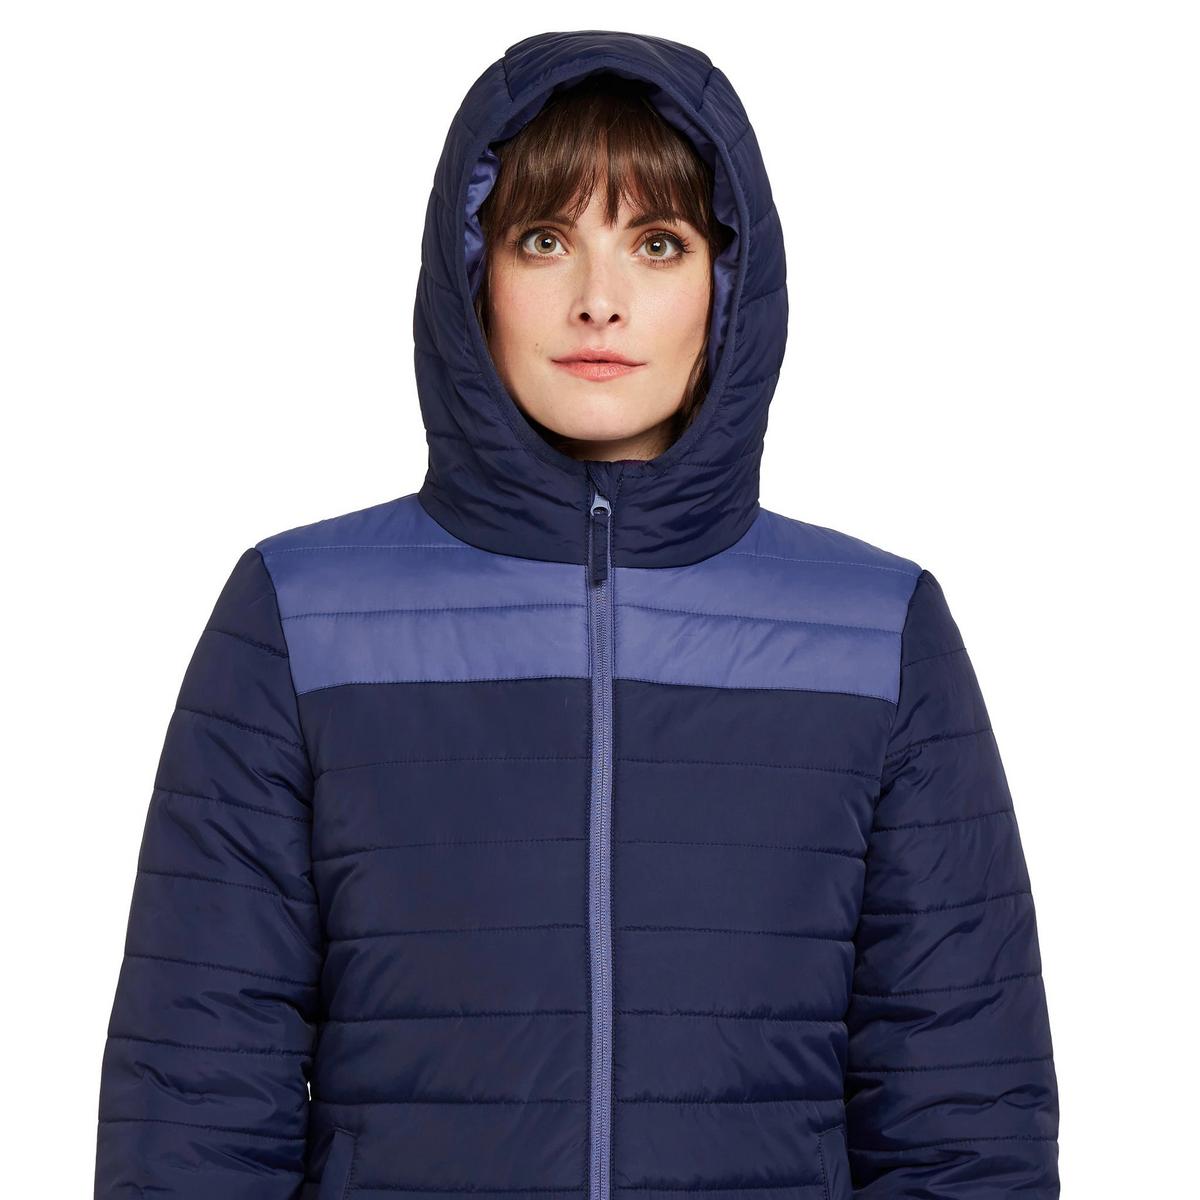 Peter Storm Women's Blisco II Hooded Jacket - Blue